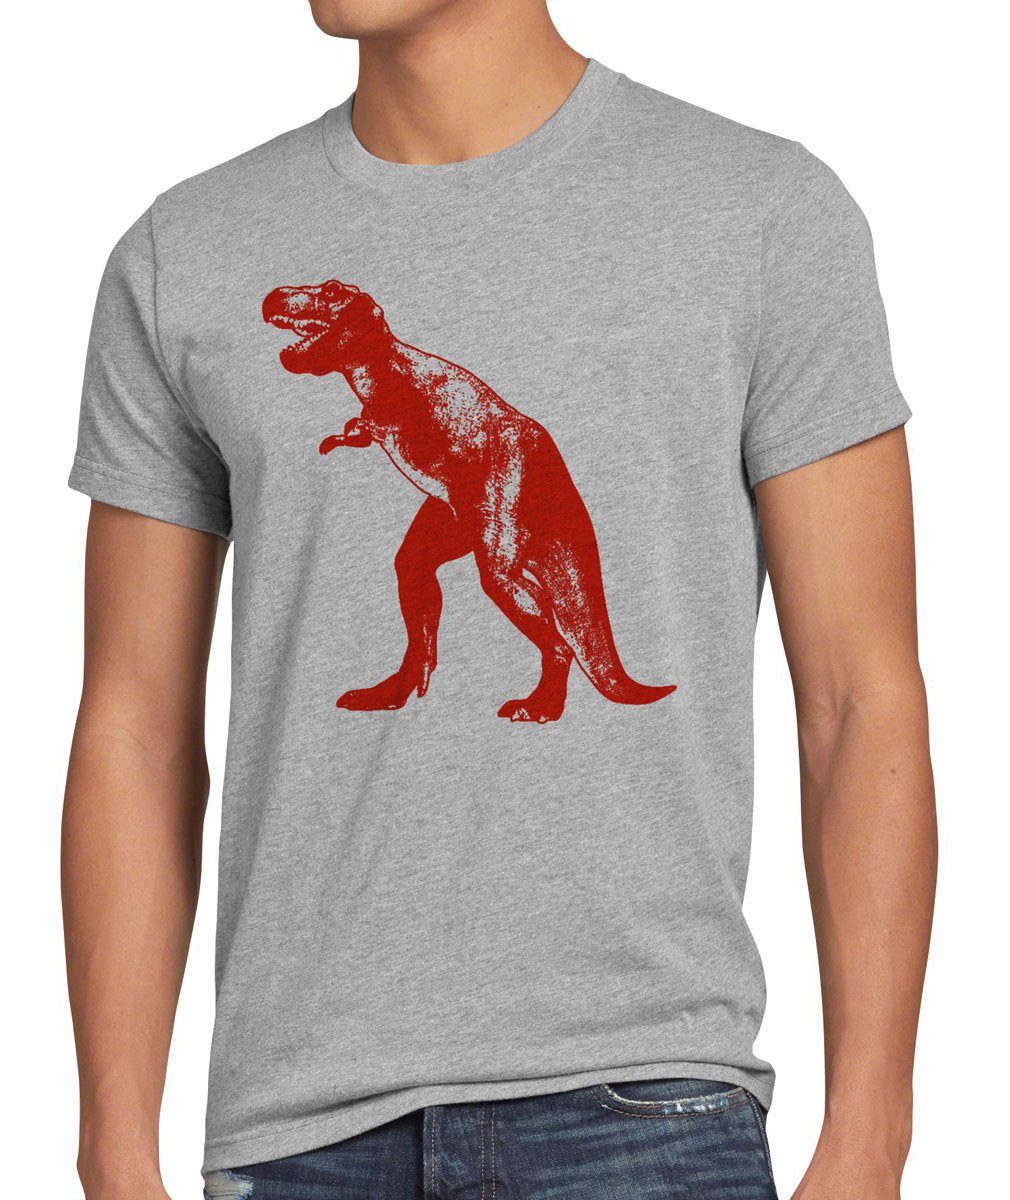 style3 Print-Shirt Herren T-Shirt Dinosaurier Rex Sheldon Cooper Evolution big bang Dino Theory grau meliert | T-Shirts